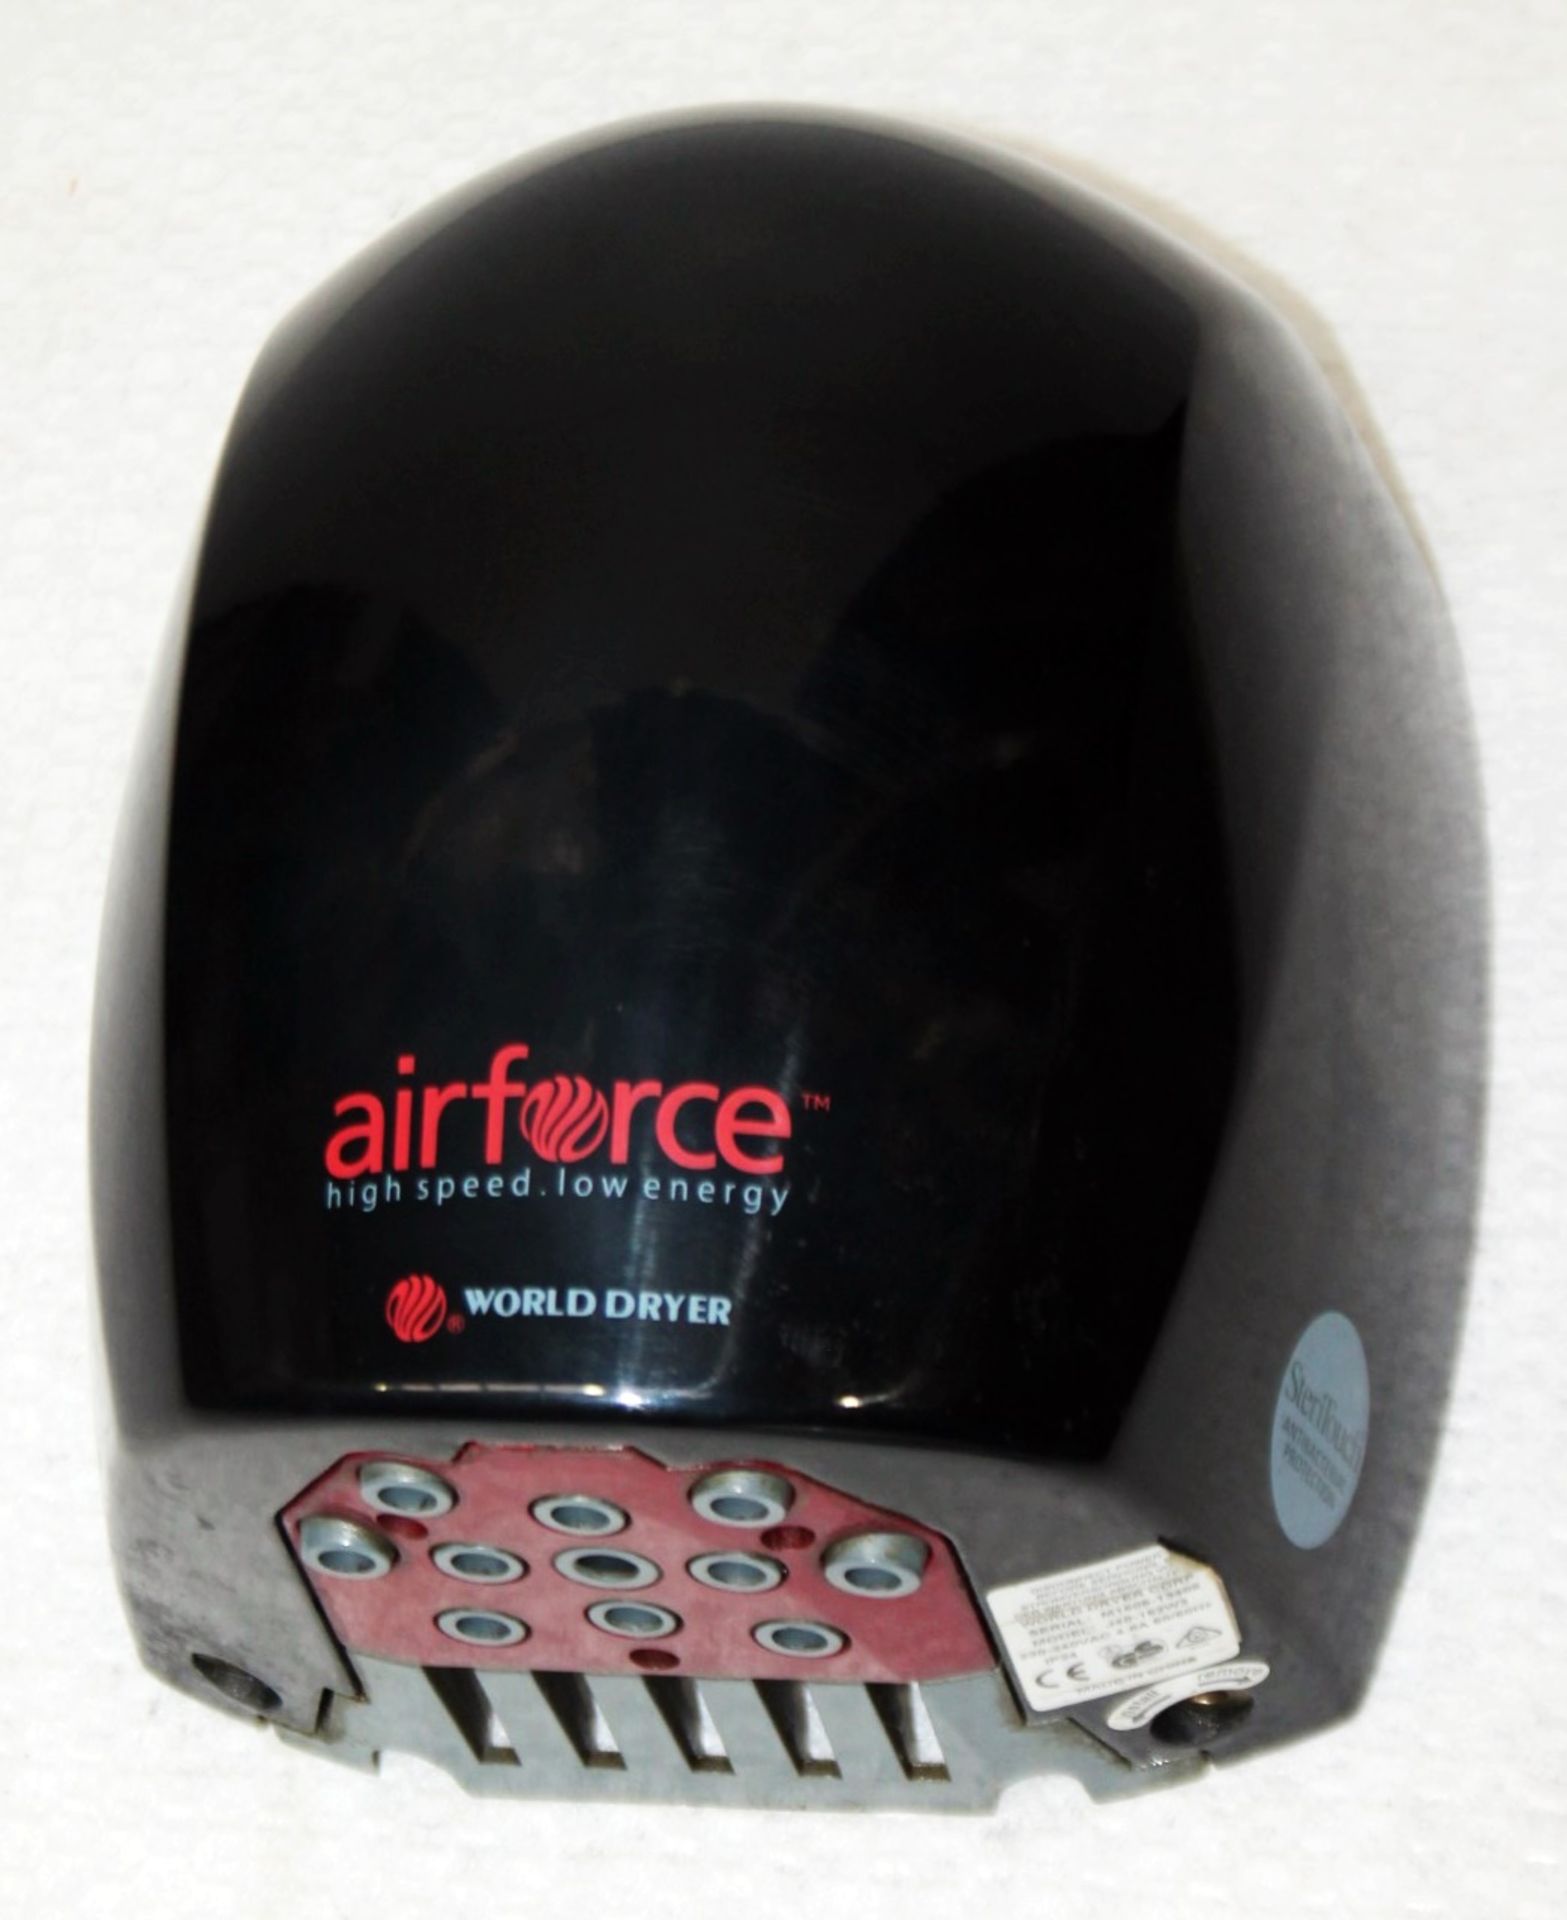 1 x Warner Howard 'Airforce' Commercial Hand Dryer In Black - Original RRP £391.00 - CL805 - - Image 5 of 5